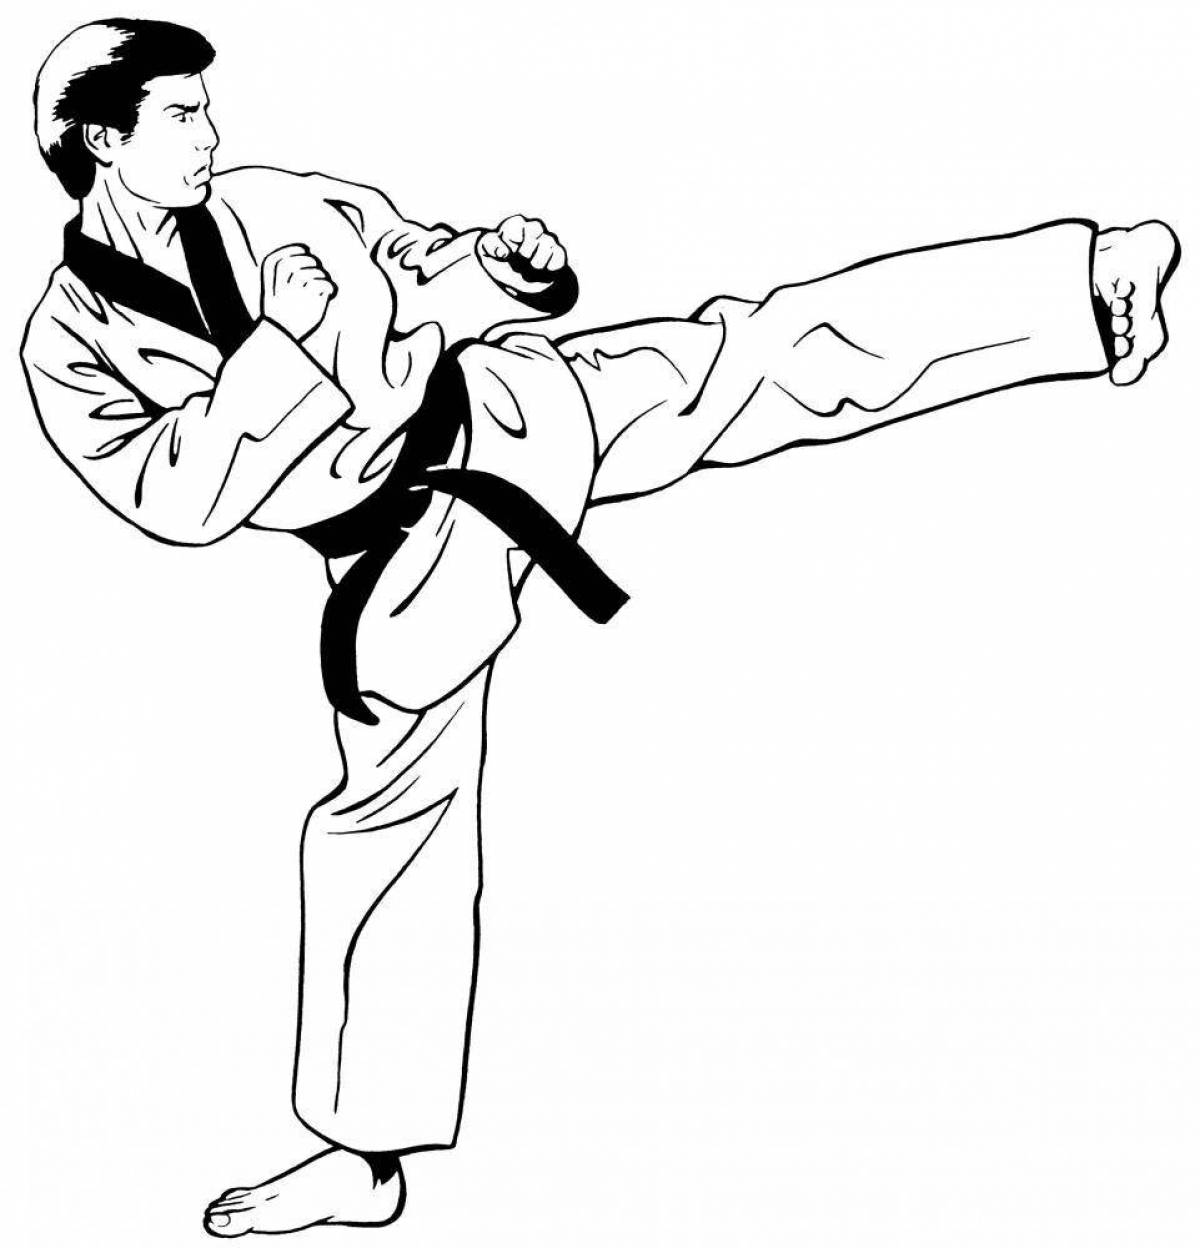 Colorful taekwondo coloring page